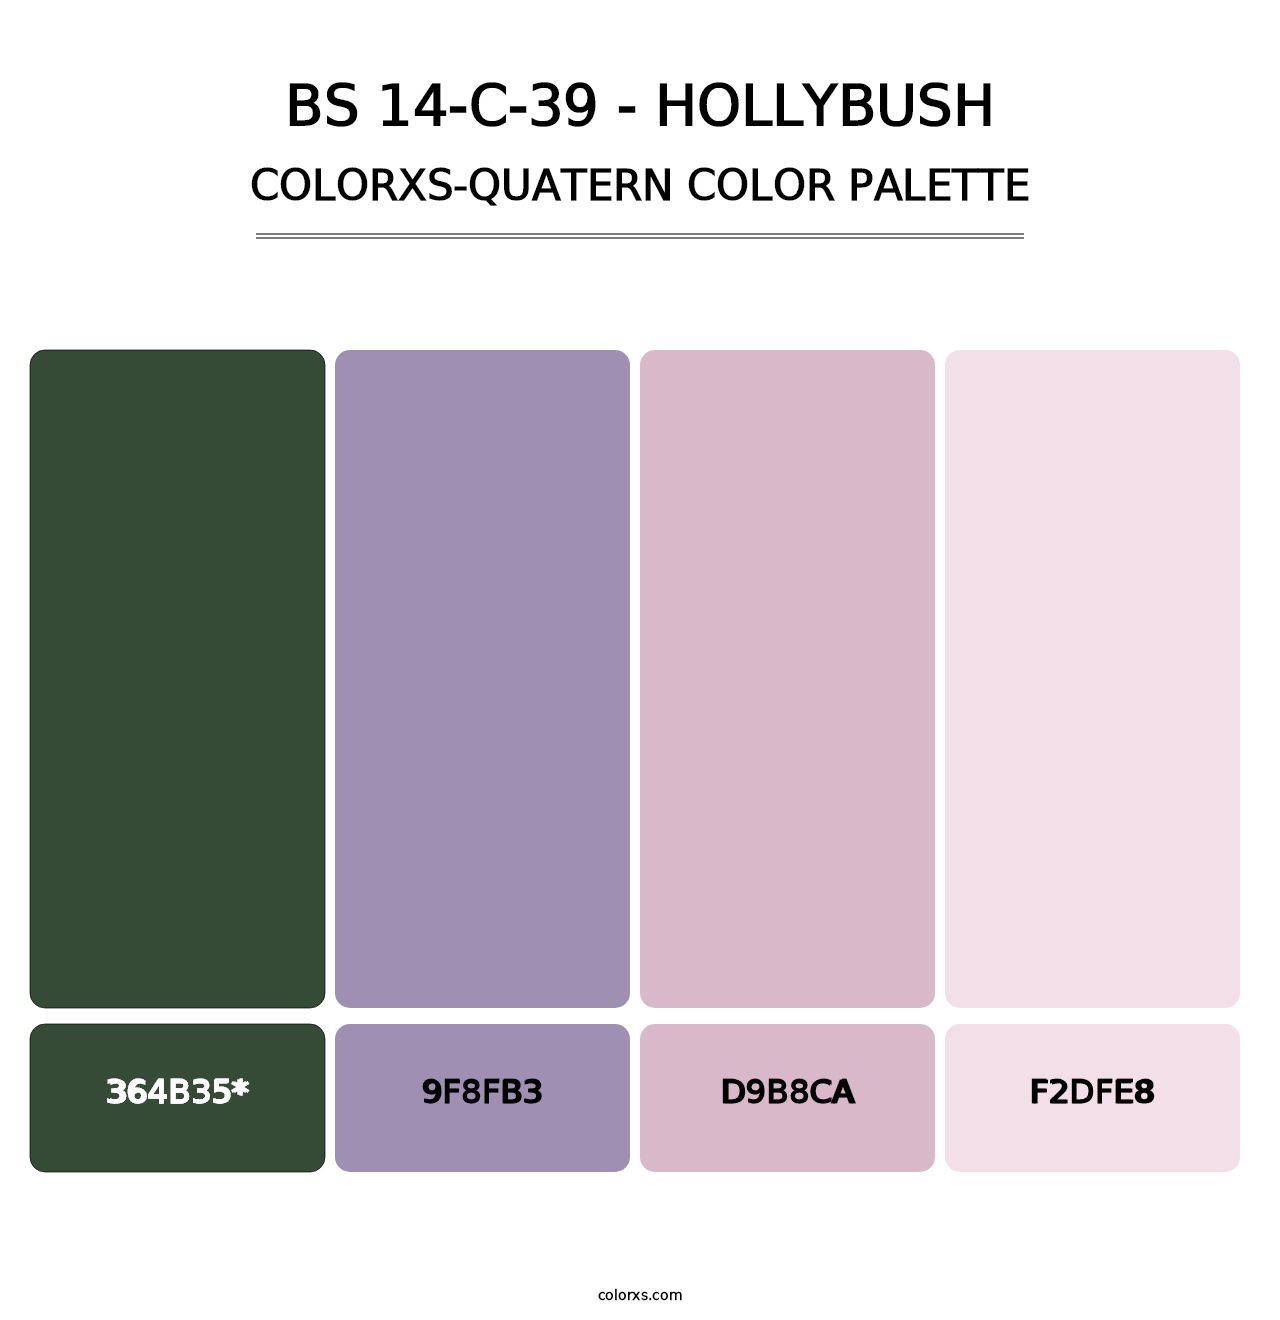 BS 14-C-39 - Hollybush - Colorxs Quatern Palette